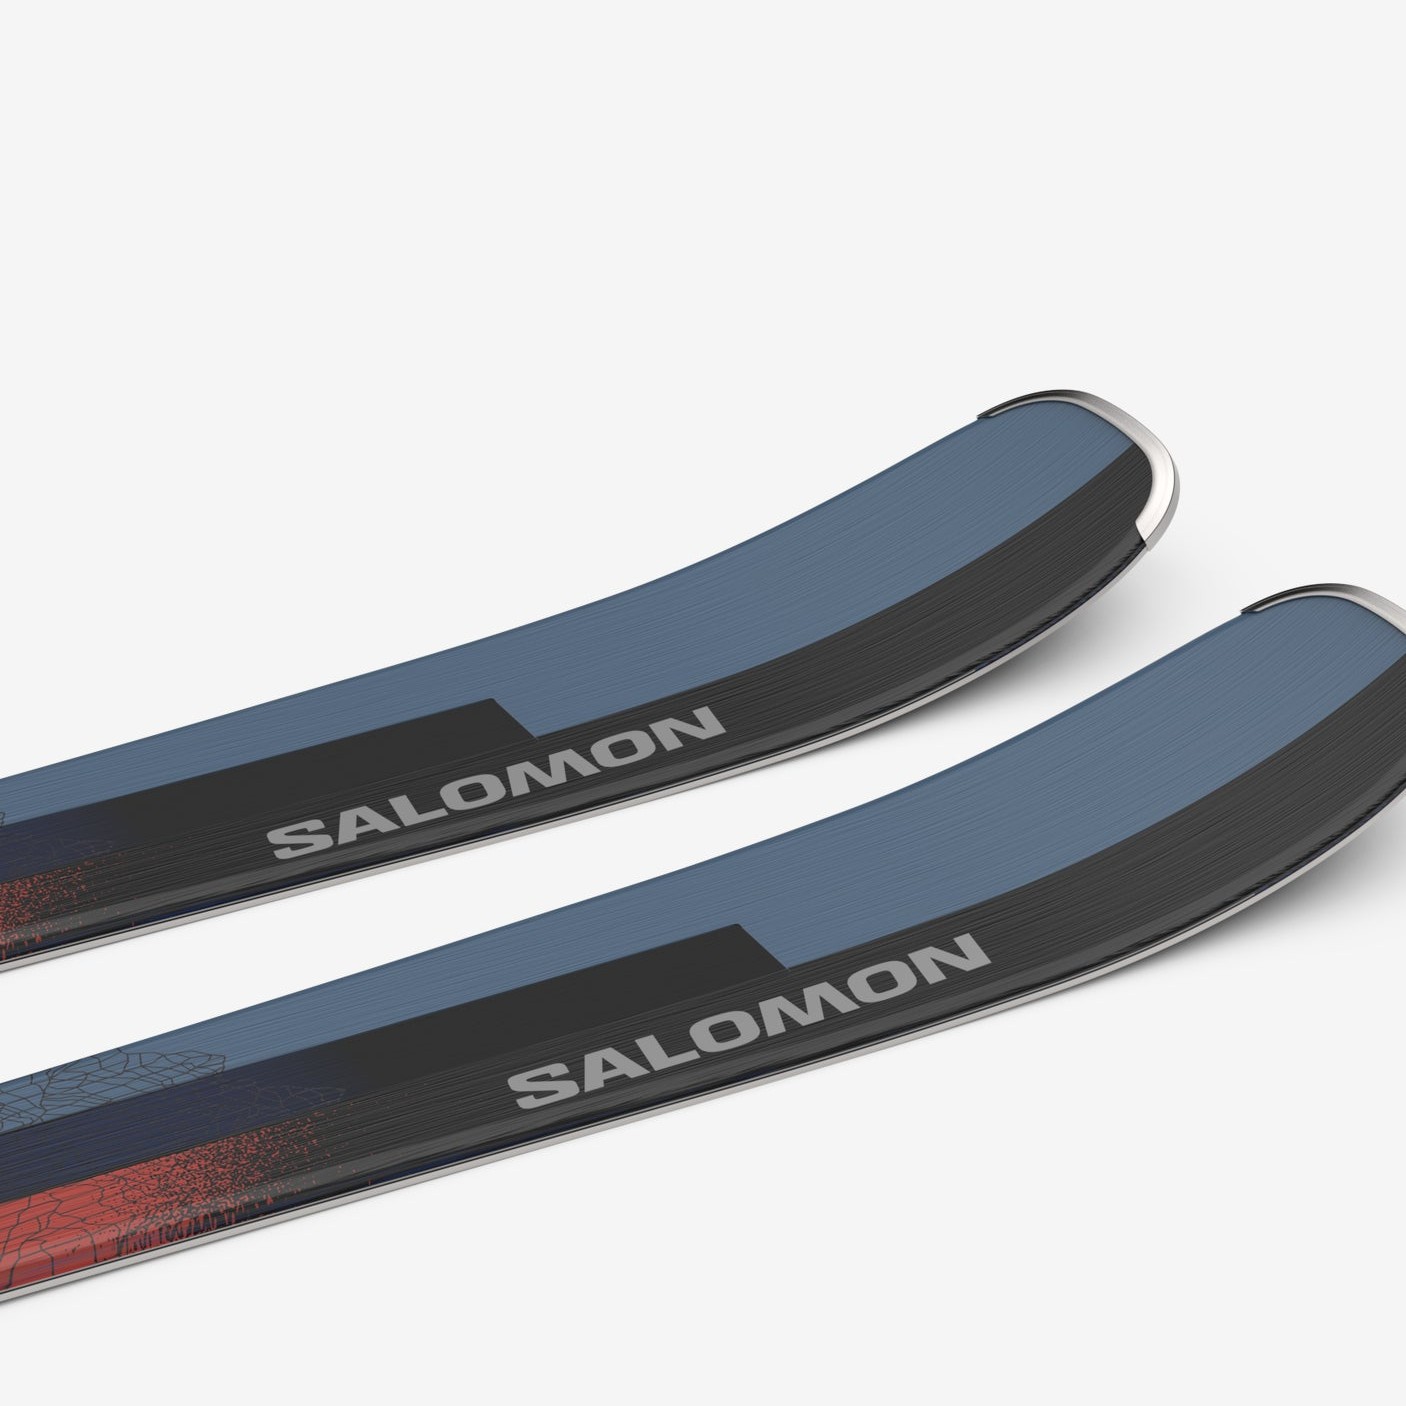 Salomon Stance 80 Skis